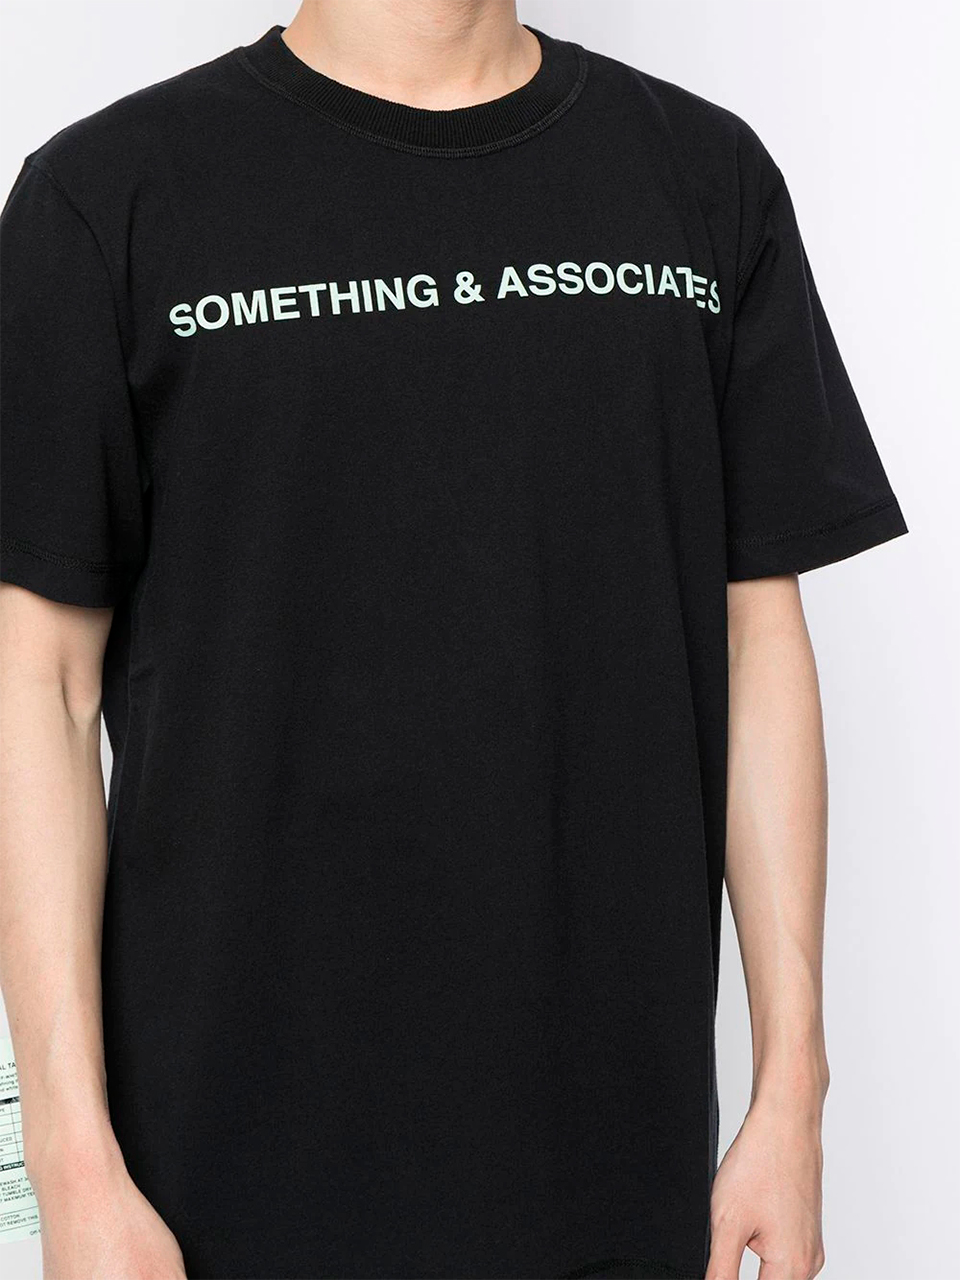 Imagem de: Camiseta Off-White Something & Associates Preta